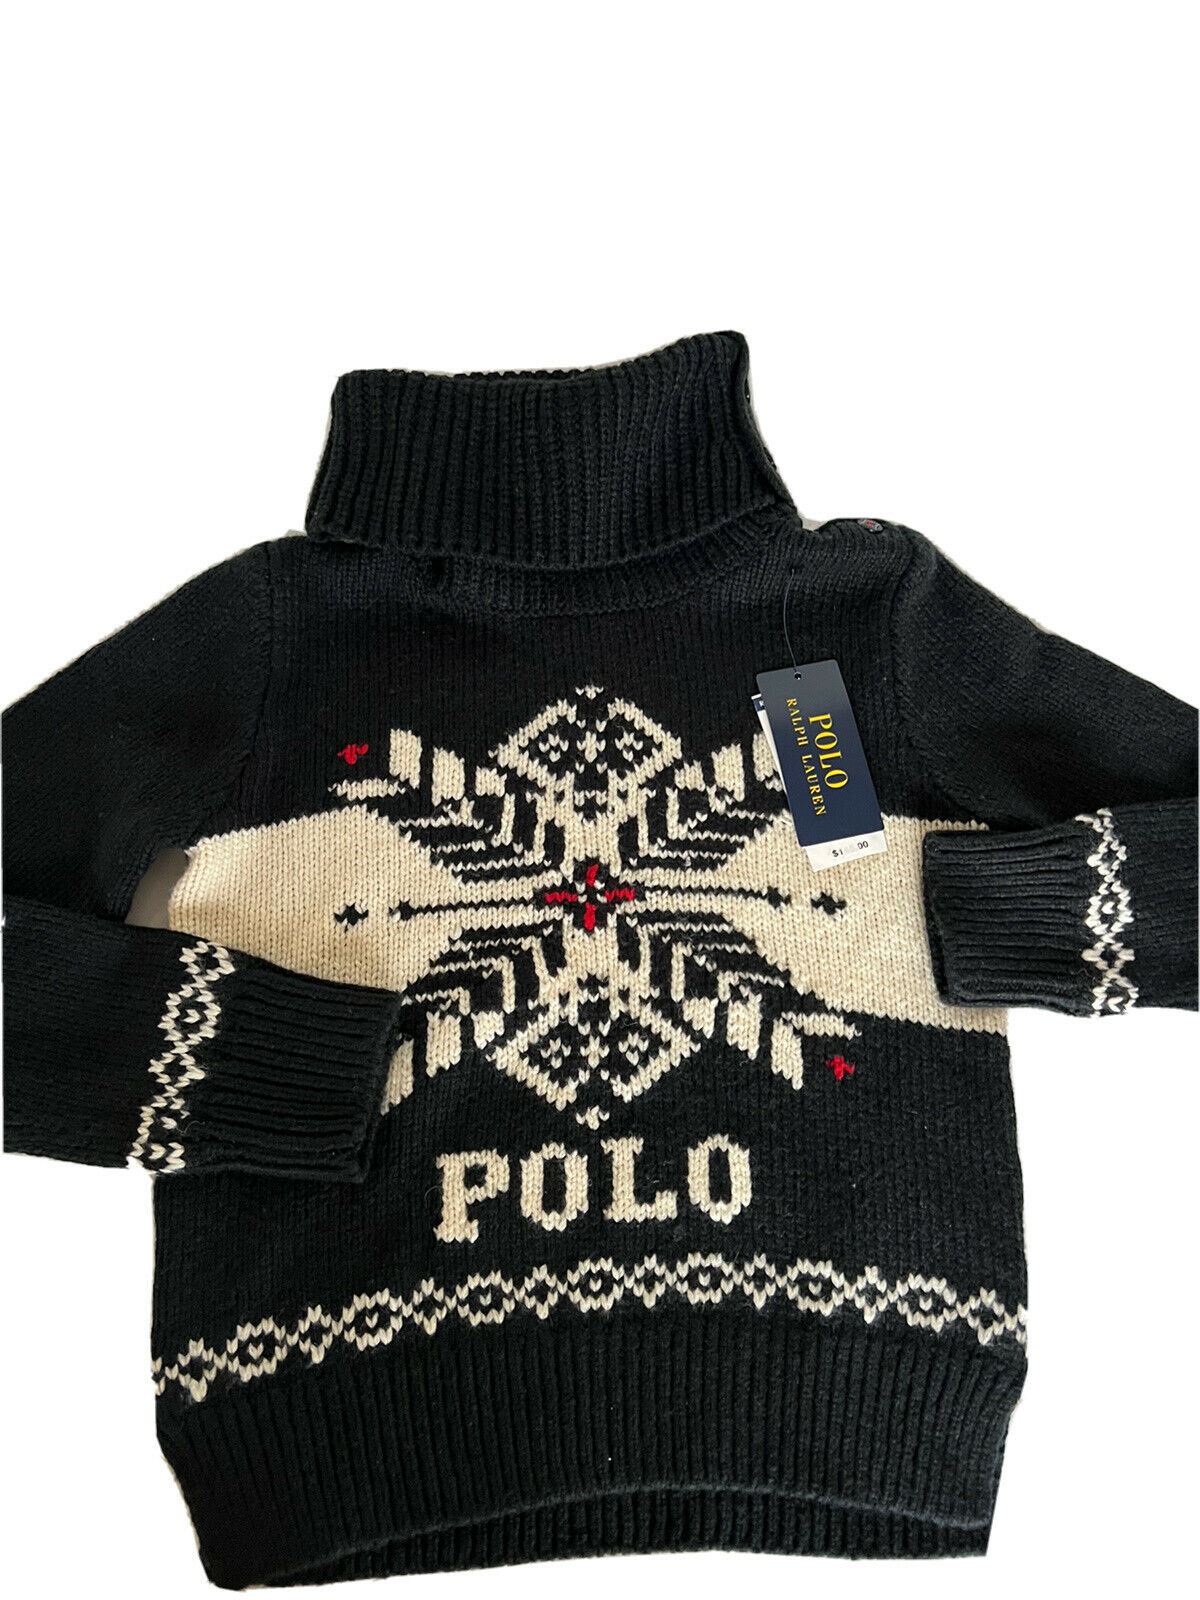 NWT $145 Polo Ralph Lauren Girls Black Snow Soft Sweater Size S (7)